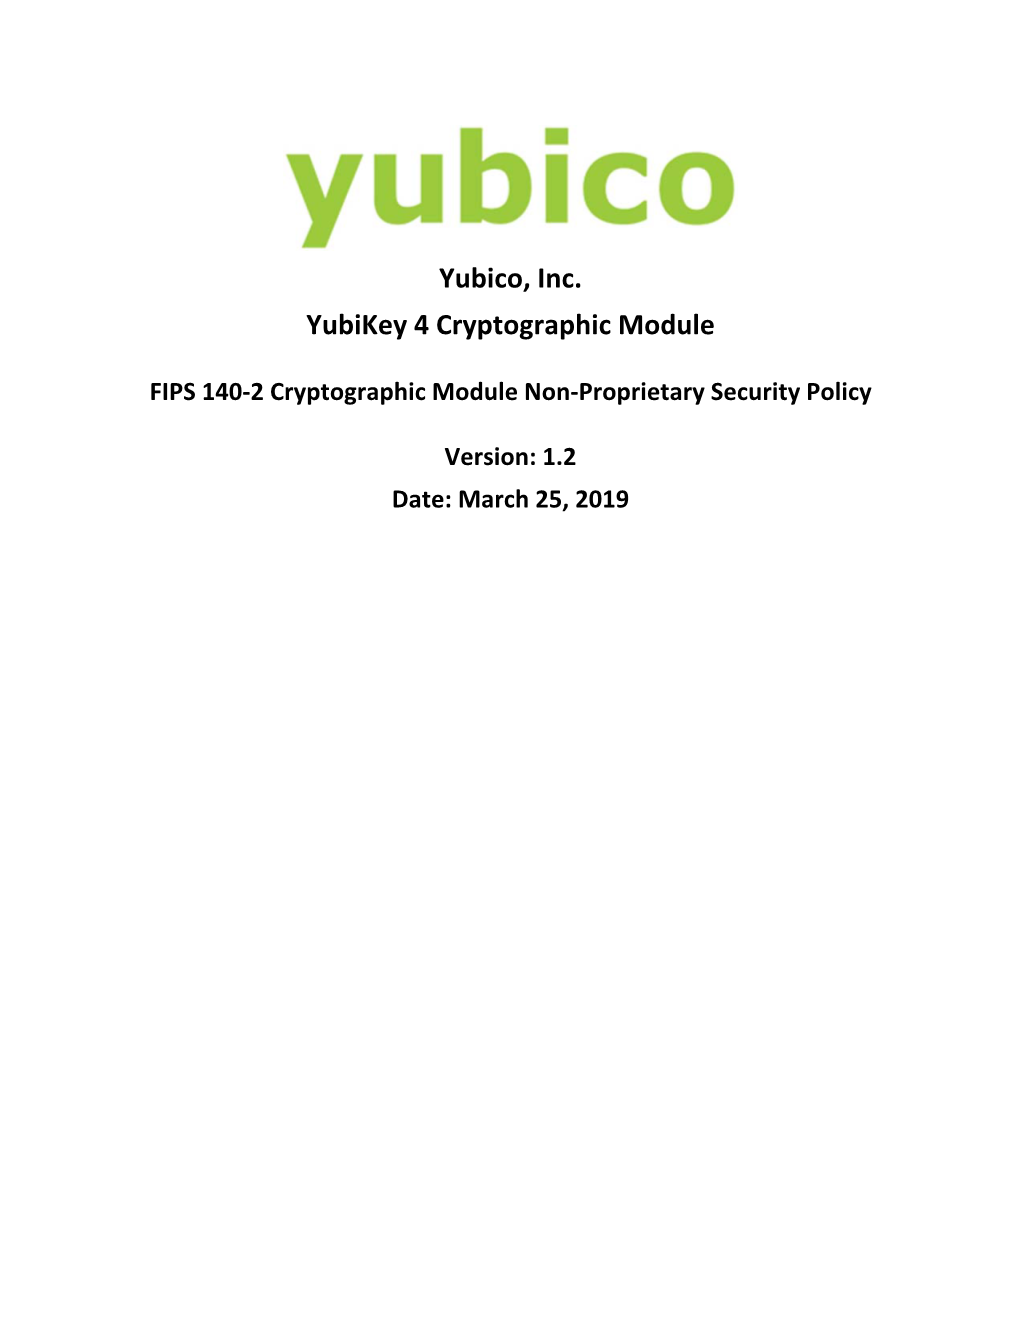 Yubico, Inc. Yubikey 4 Cryptographic Module